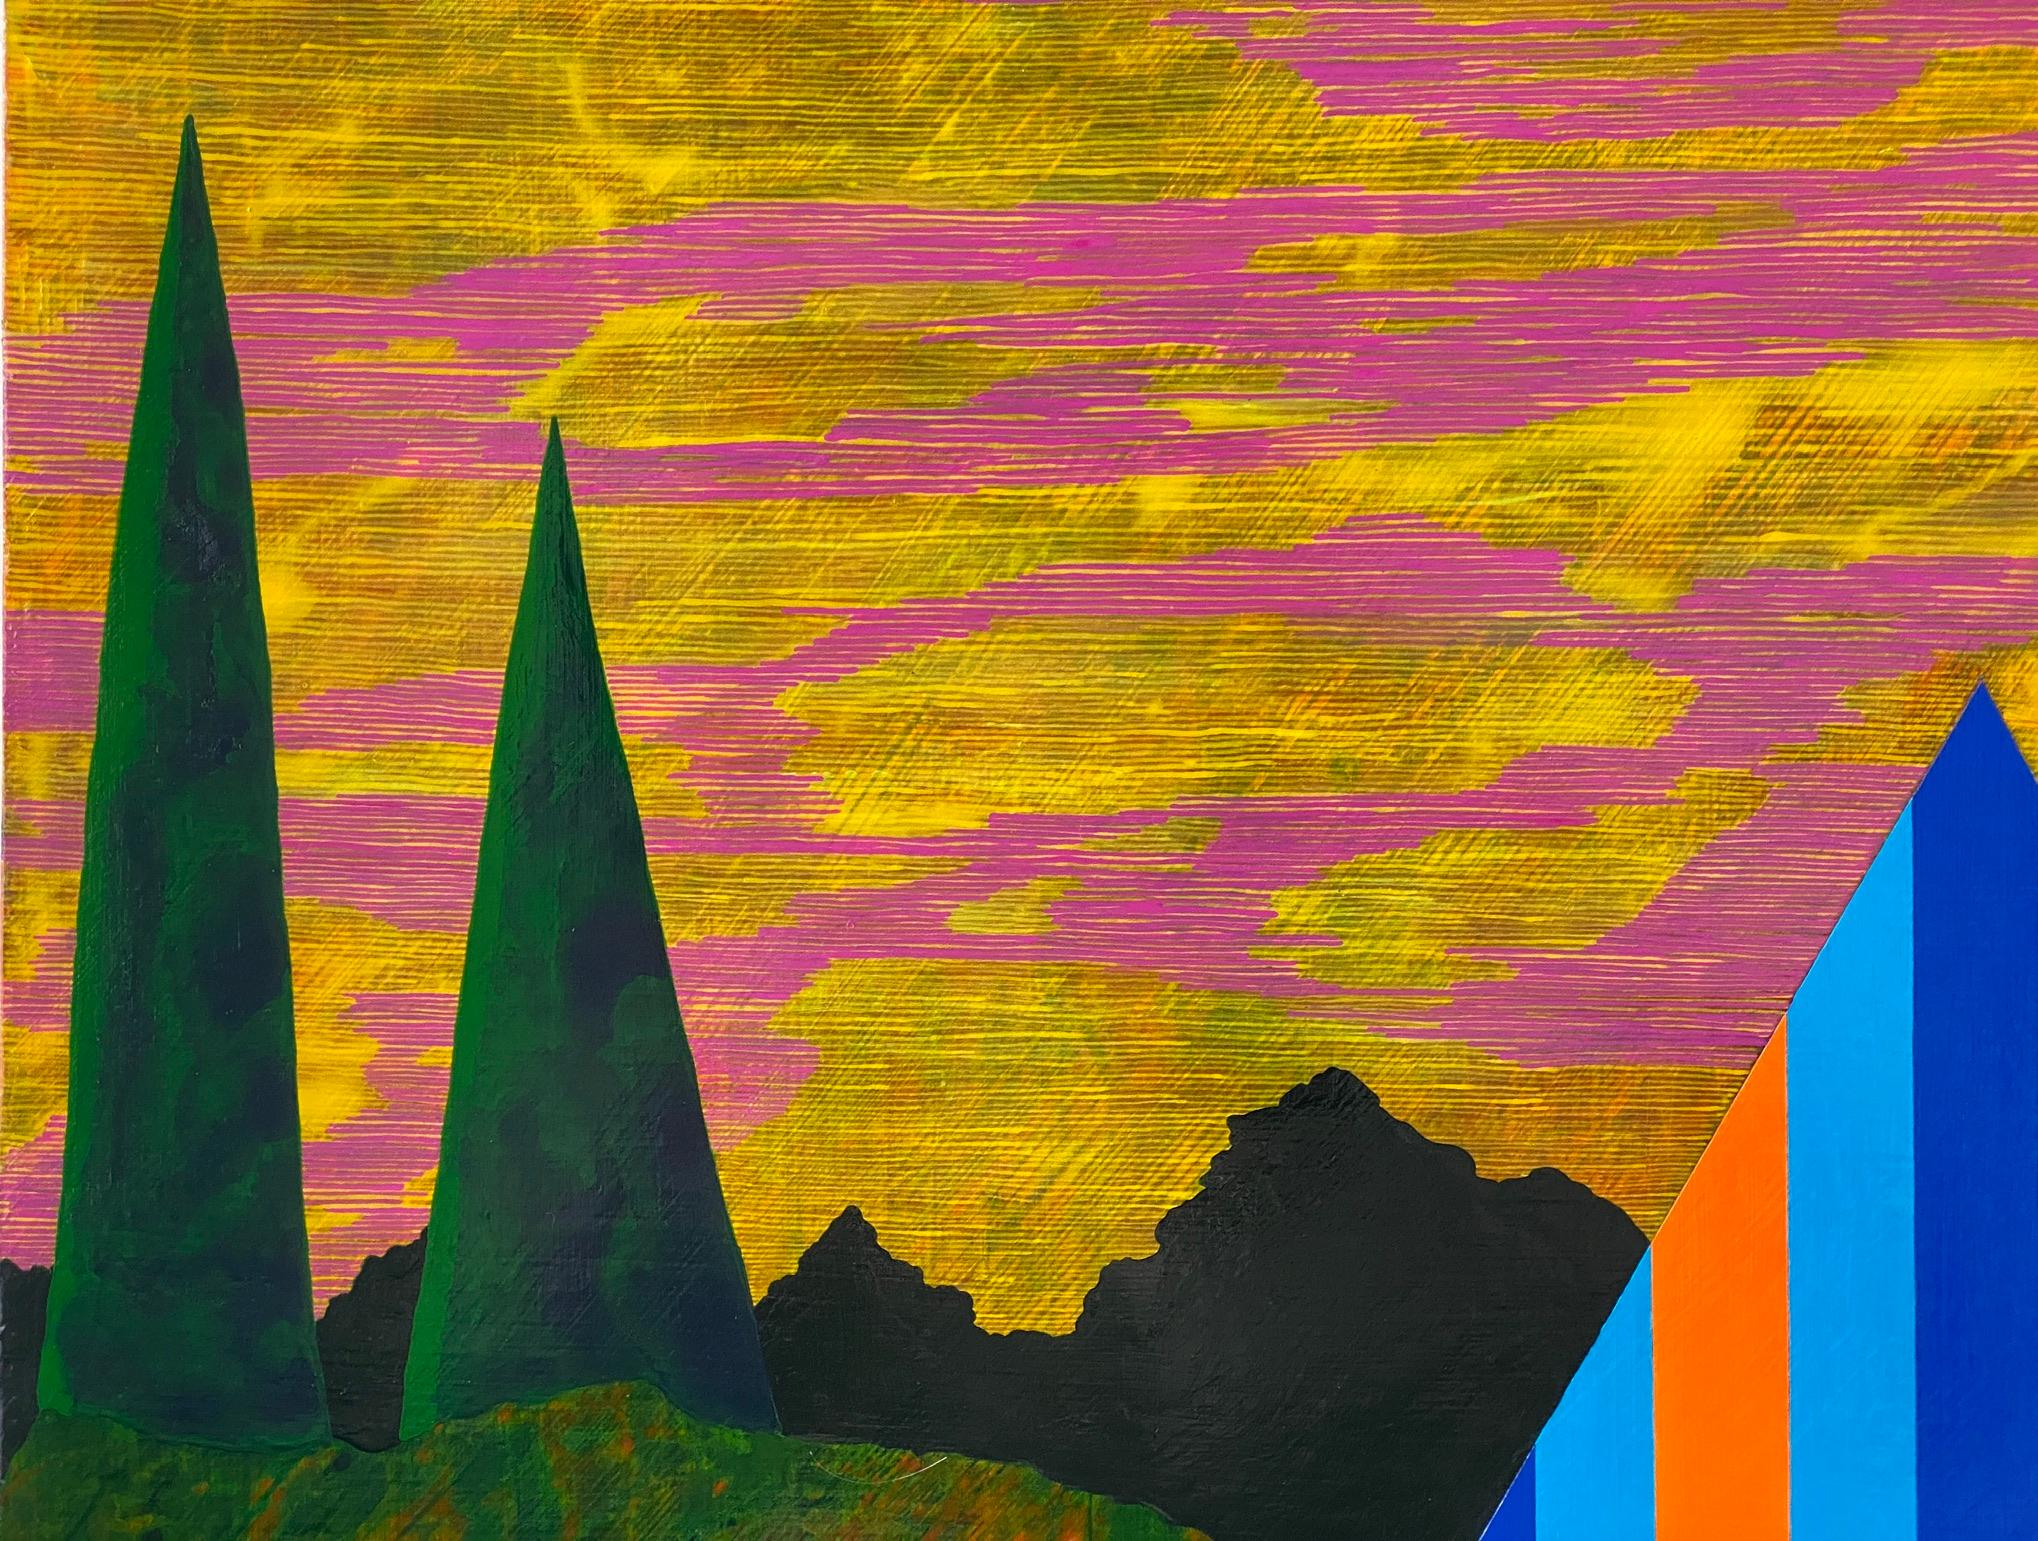 Gathering Sky, blue and orange house against sunset, painting on panel - Painting by James Isherwood